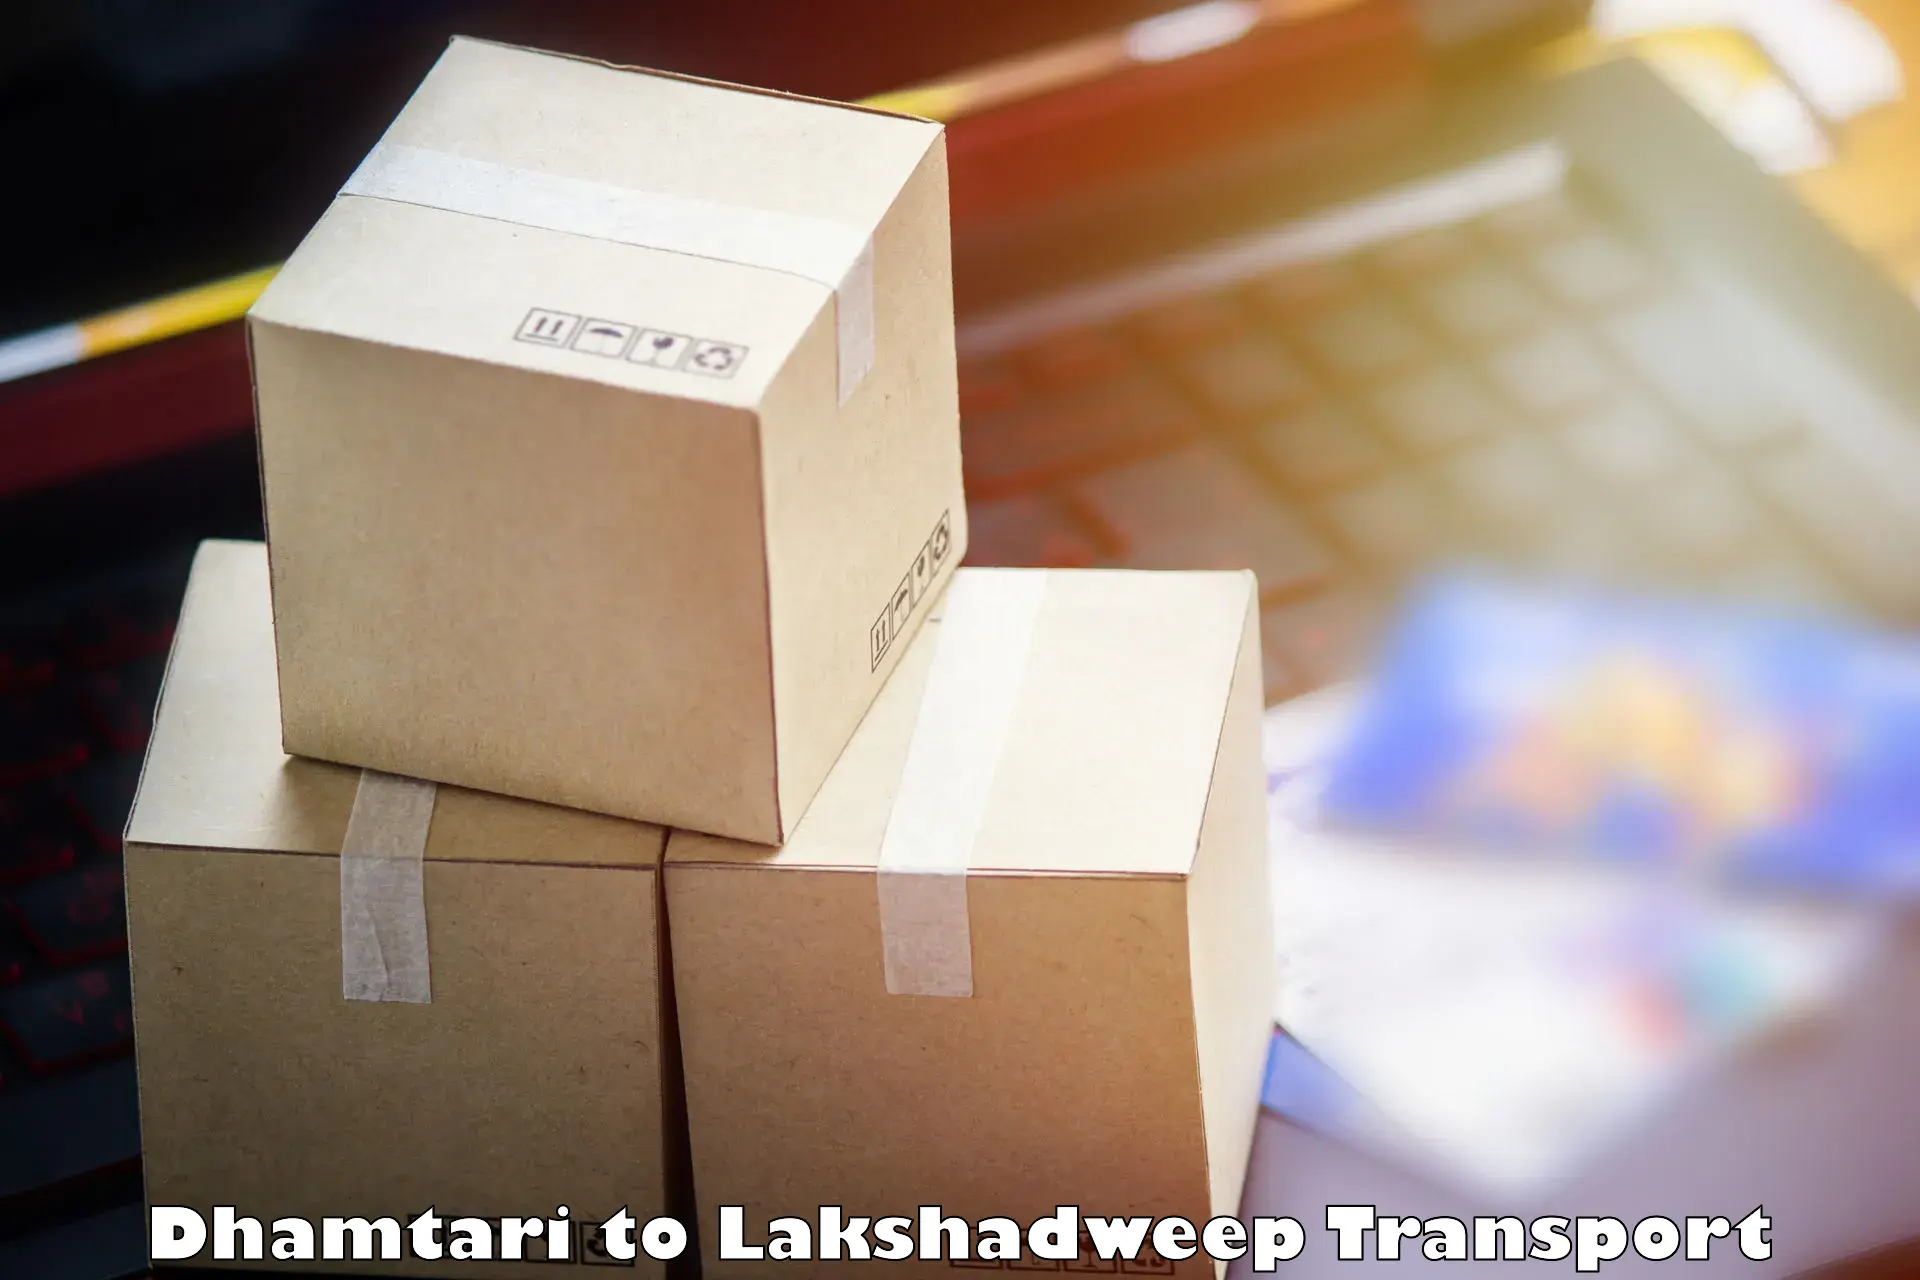 Delivery service Dhamtari to Lakshadweep